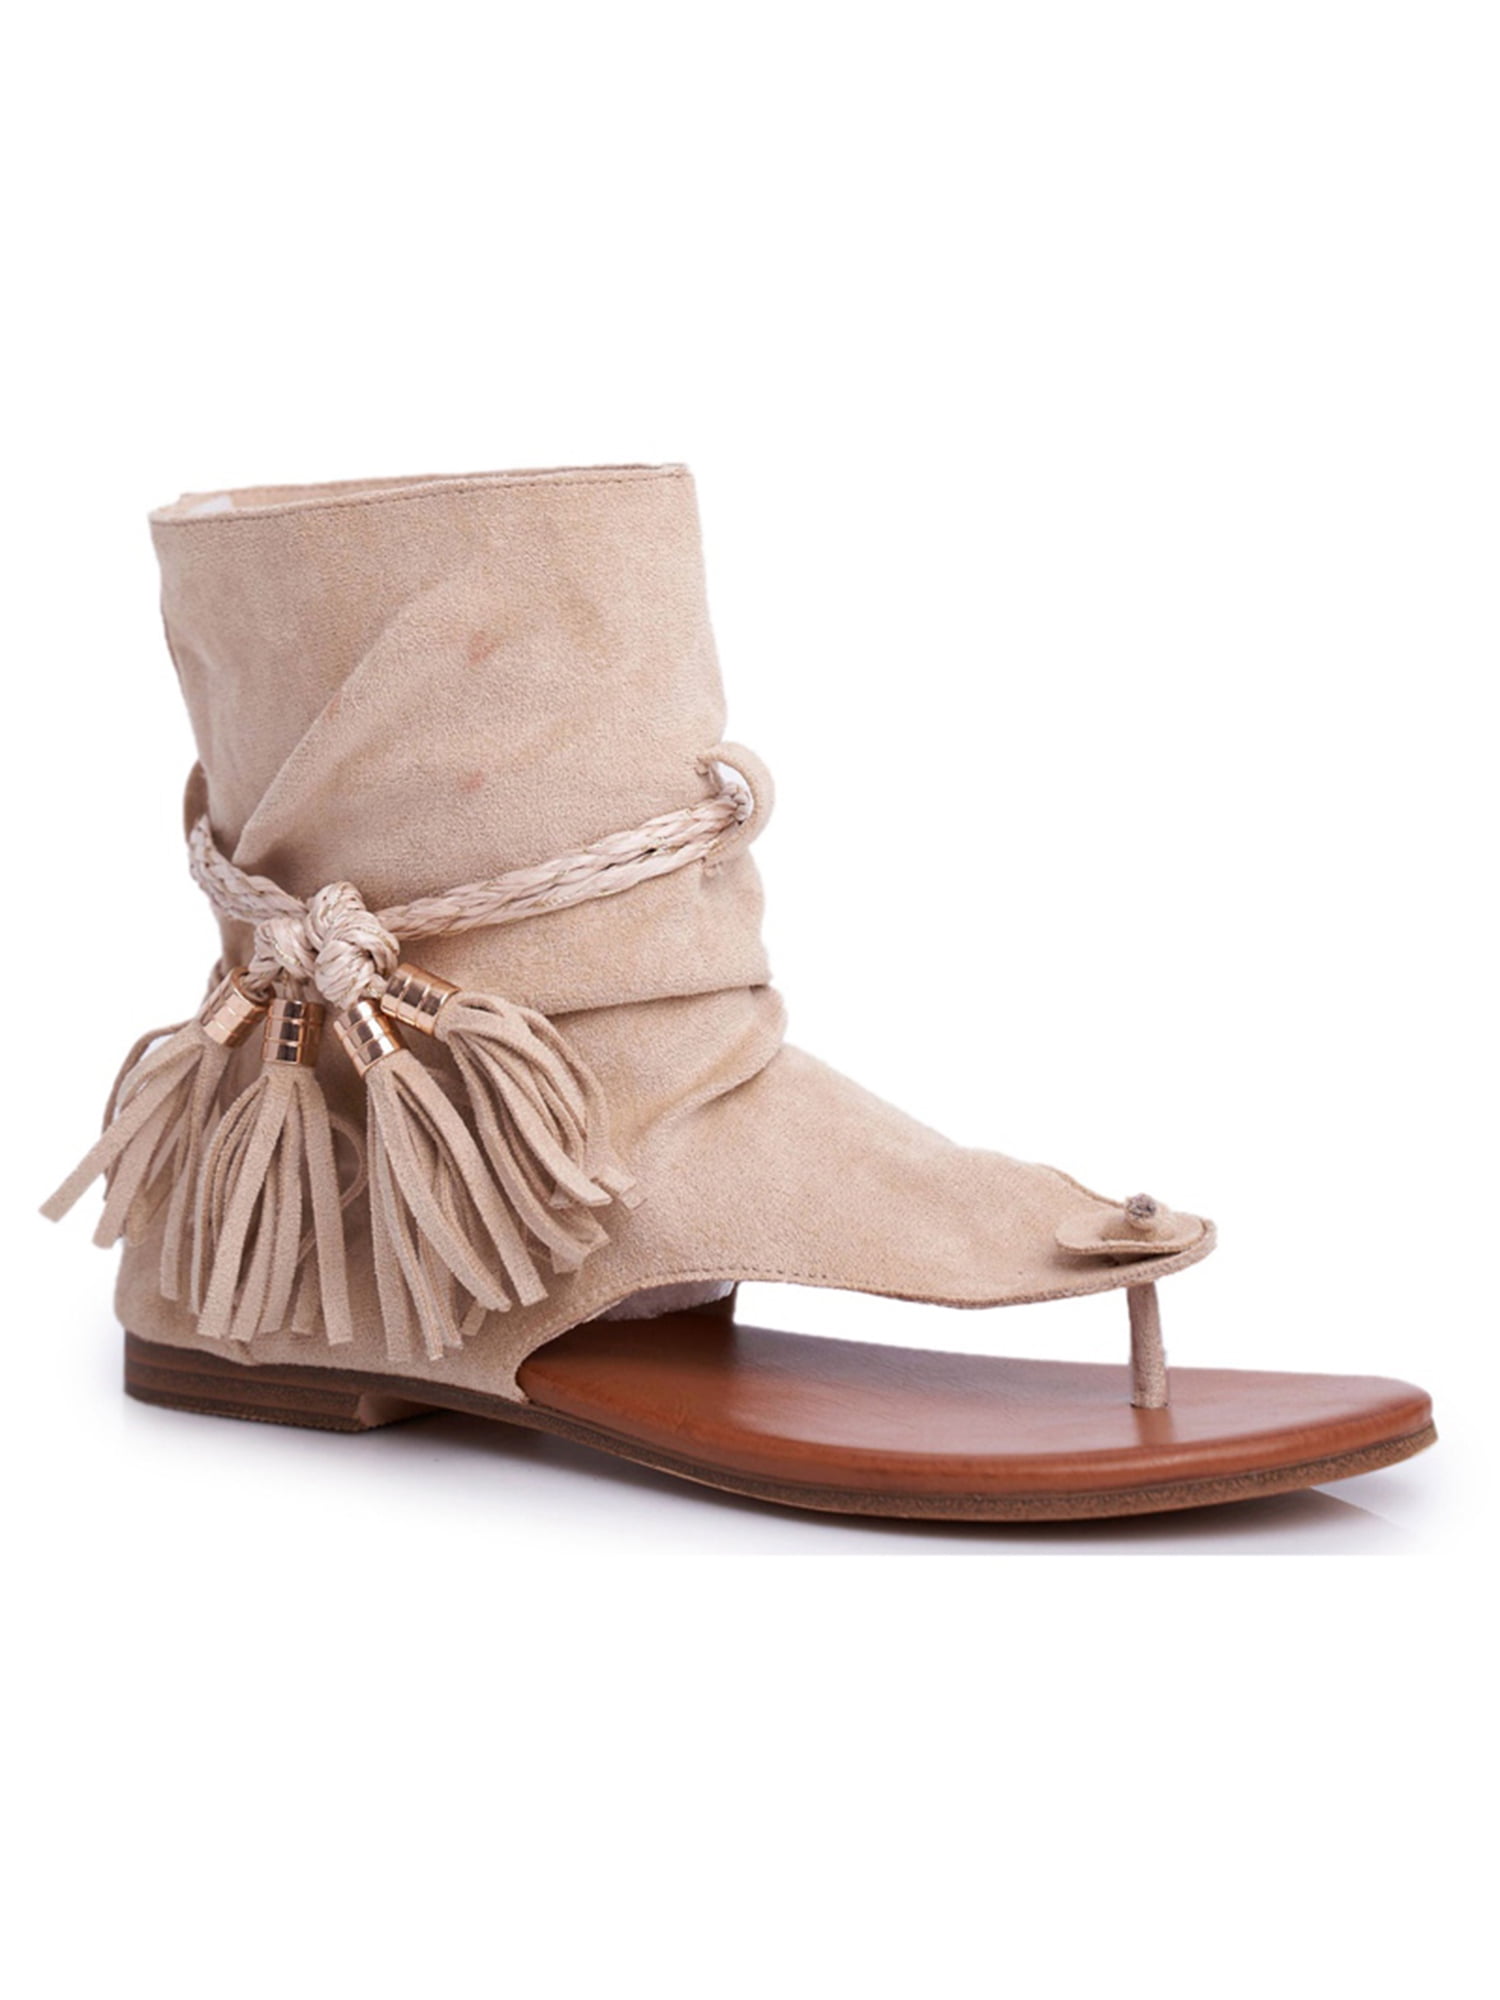 Gomelly Ladies Flip Flops Tassel Sandal Boots Summer Pull On Thong Shoes Womens Women Beach Shoe Beige 9 - Walmart.com